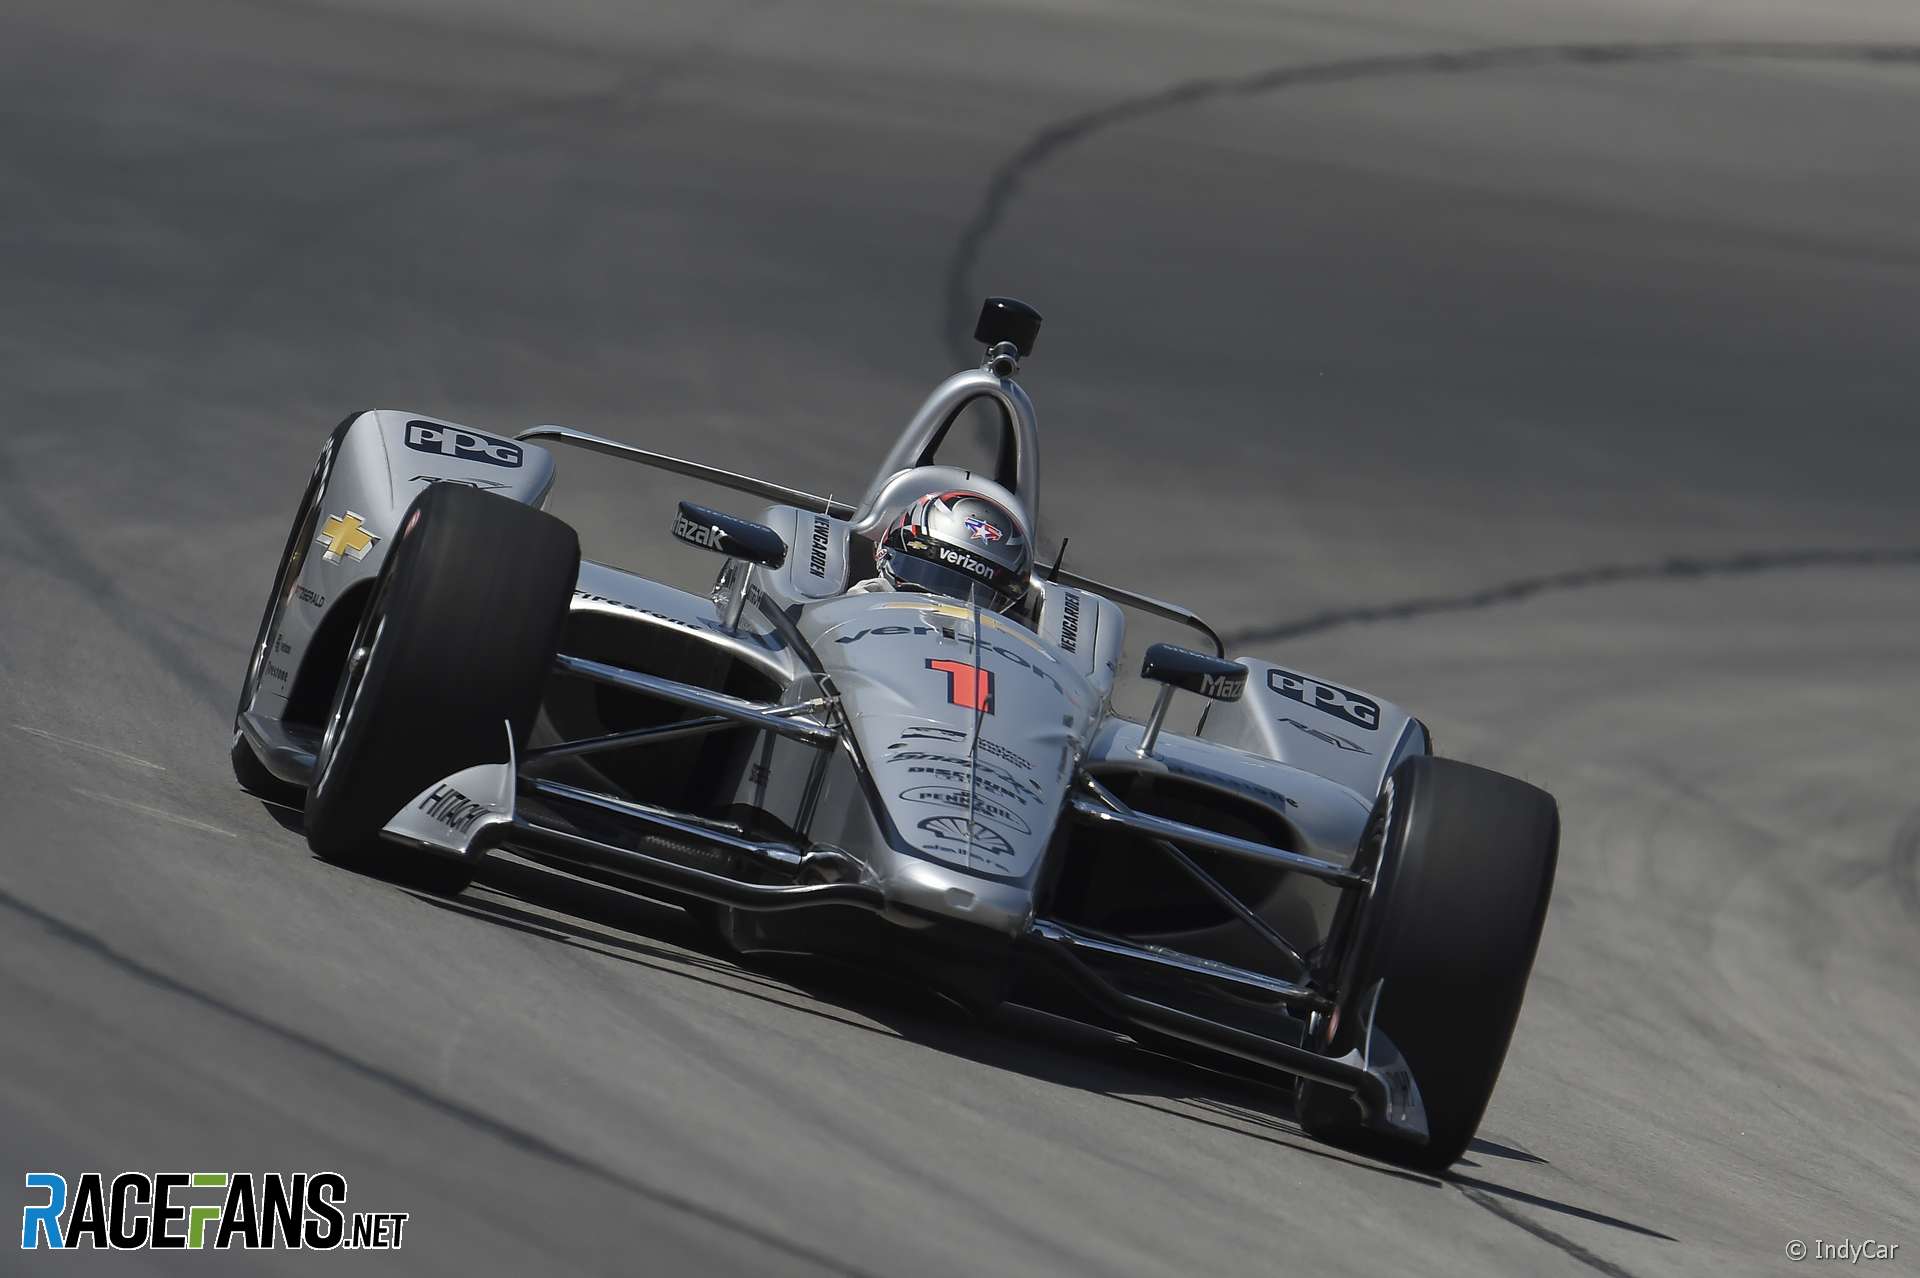 Josef Newgarden, Penske, IndyCar, Texas Motor Speedway, 2018